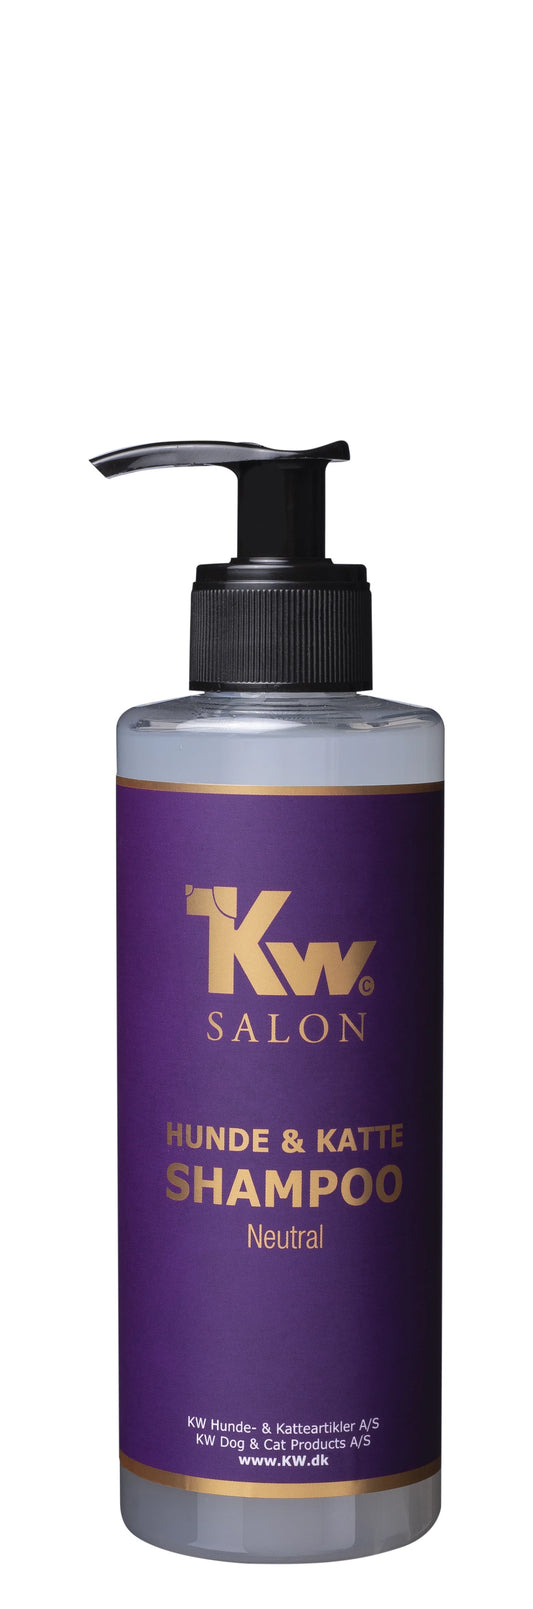 KW Salon neutral Shampoo